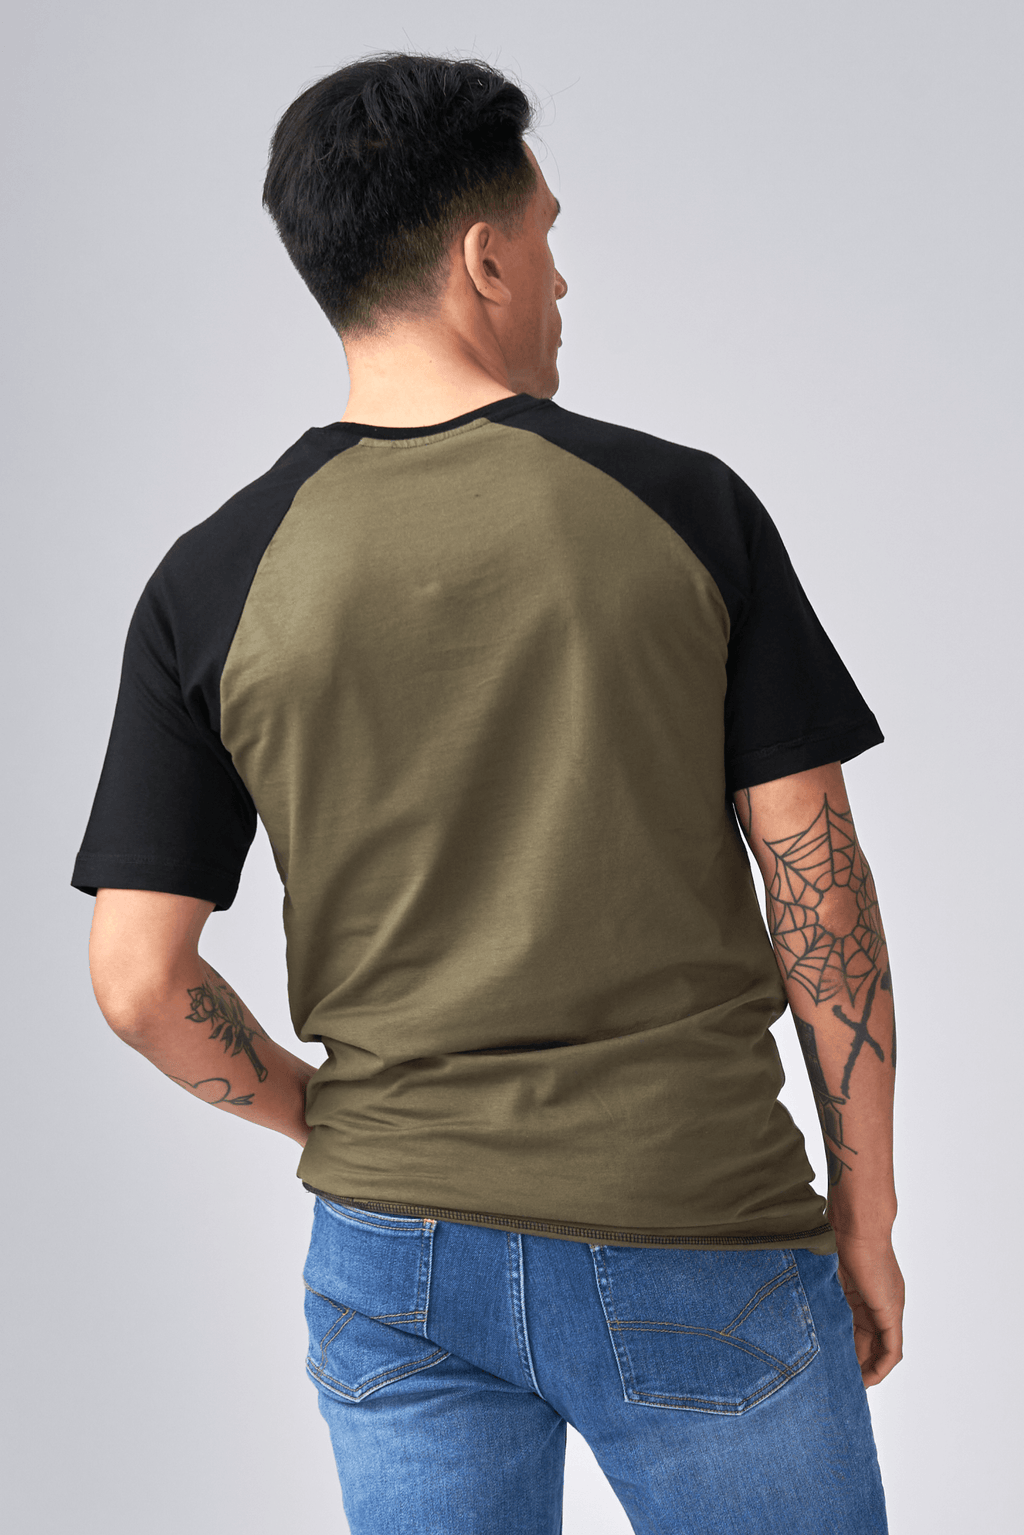 Basic raglan T-shirt - Sort-Army